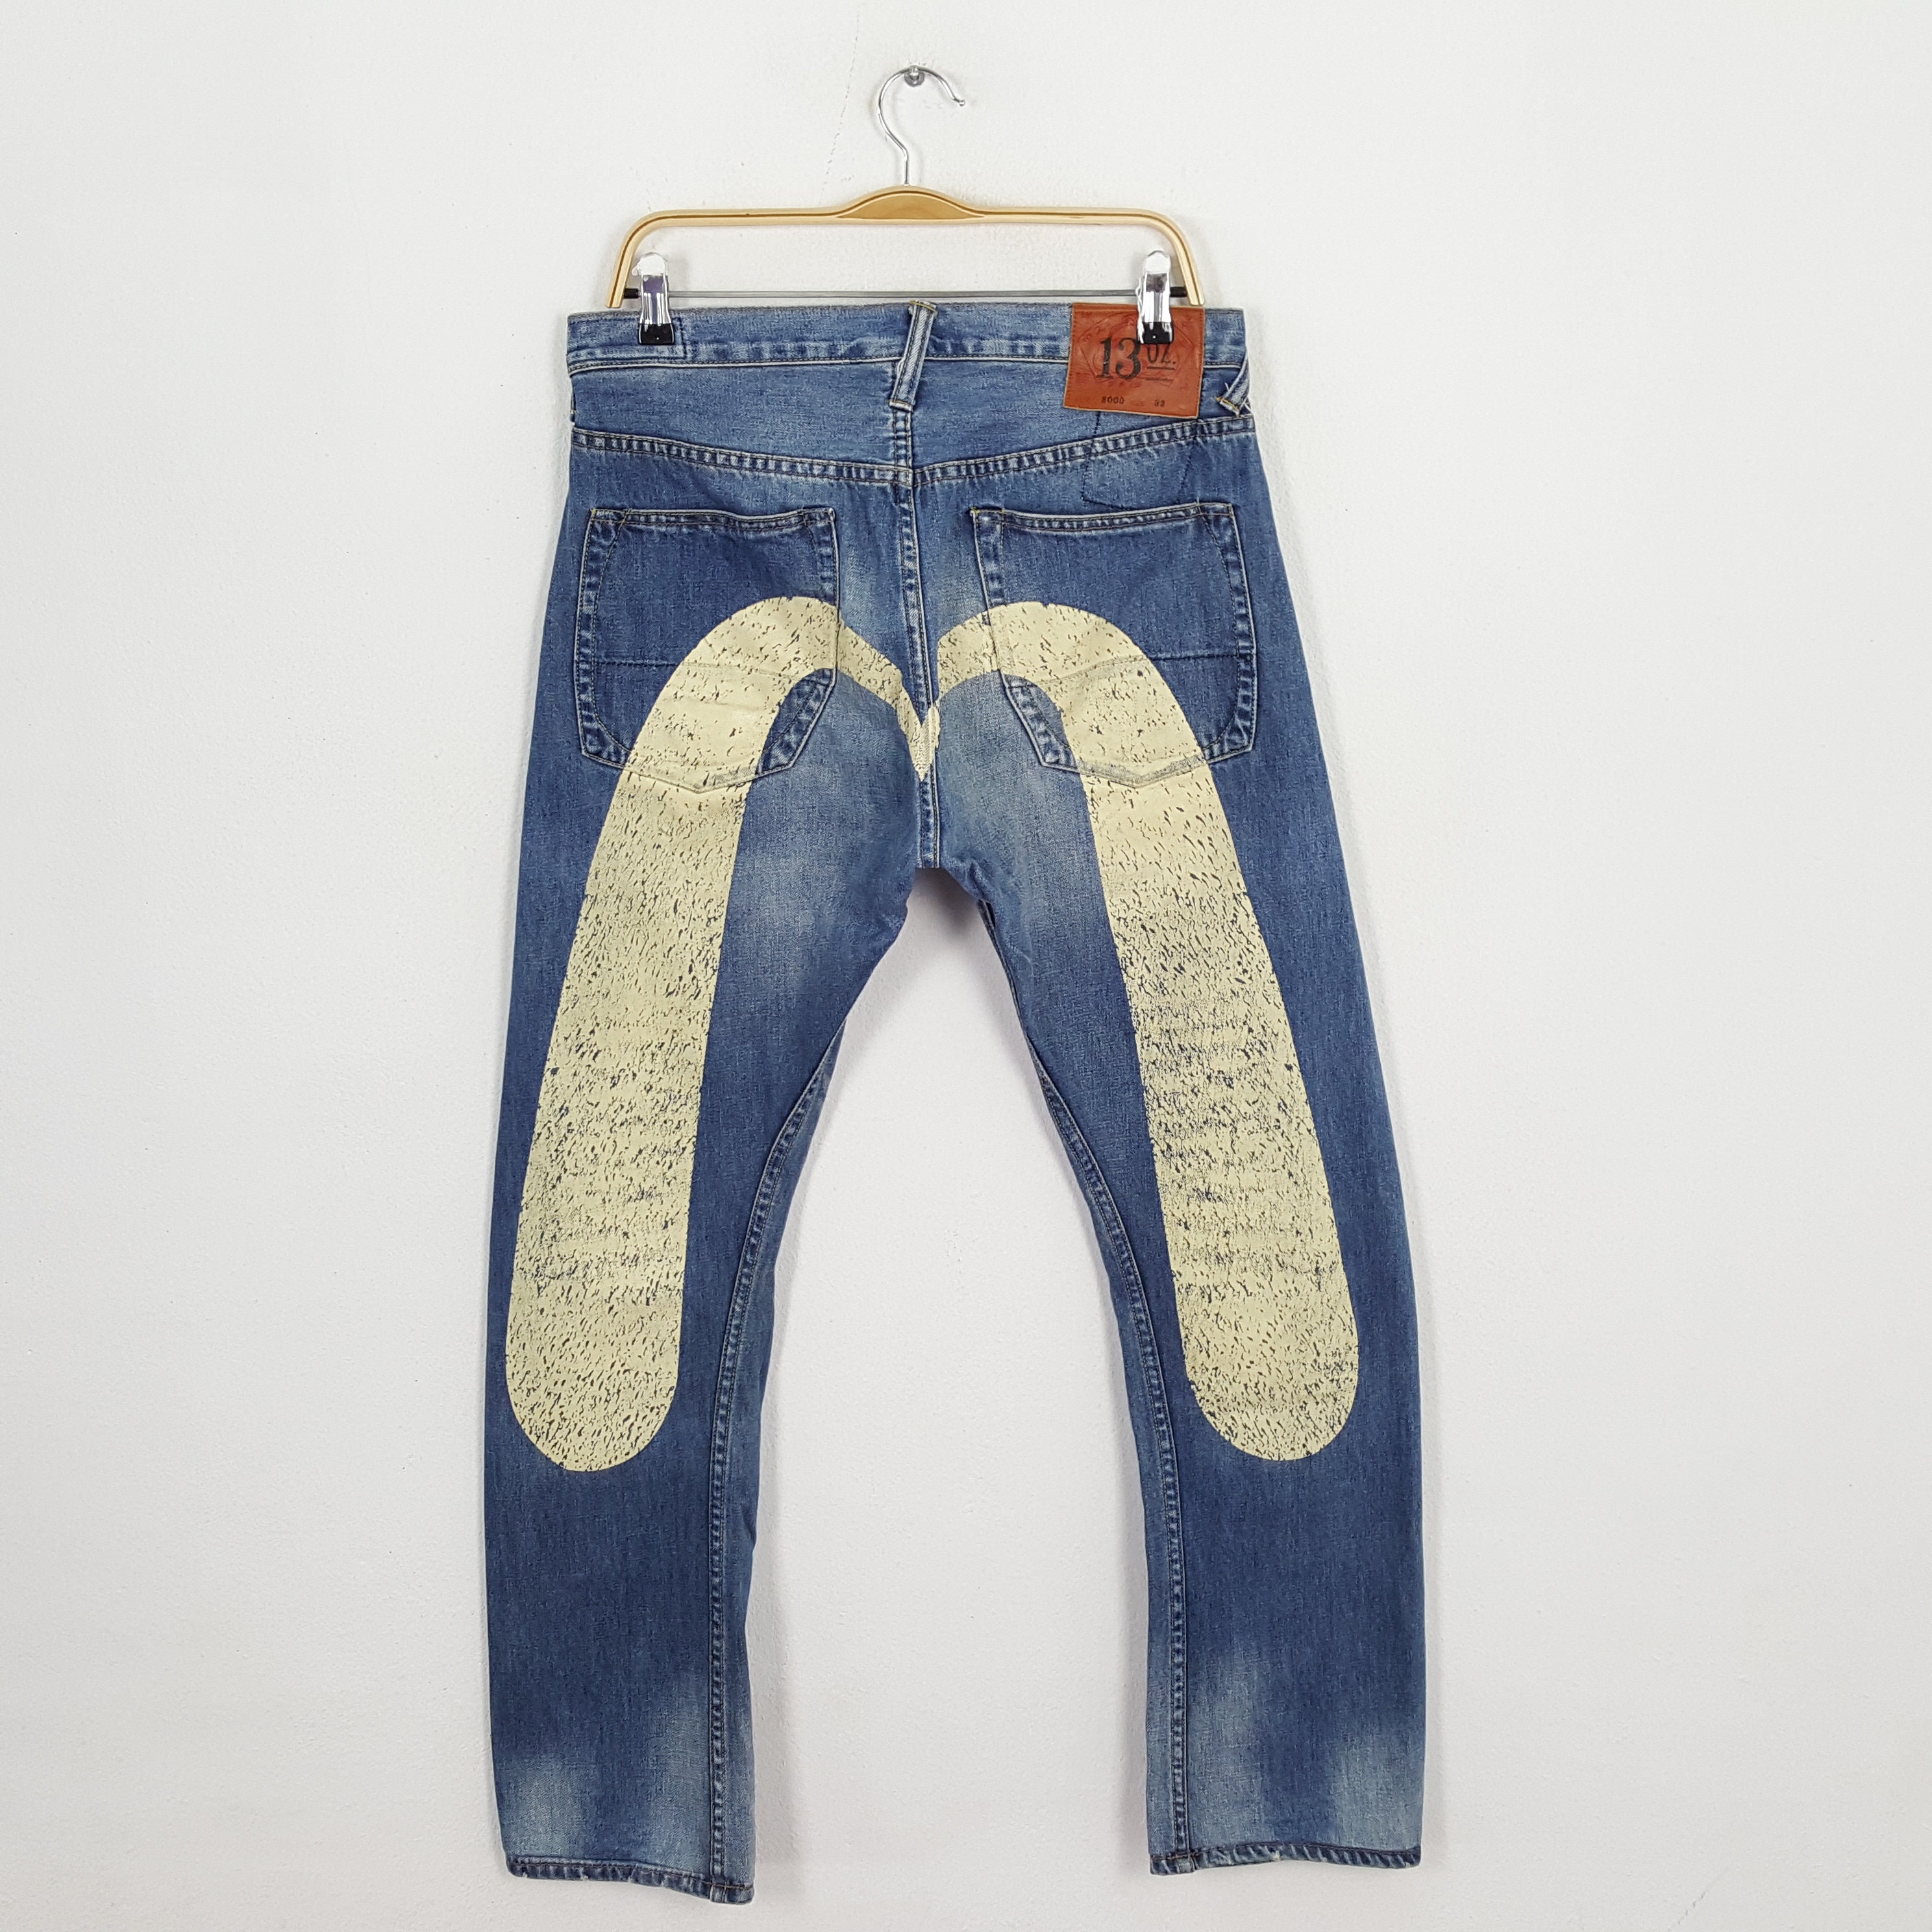 Vintage EVISU Japanese Brand Daicock Jeans